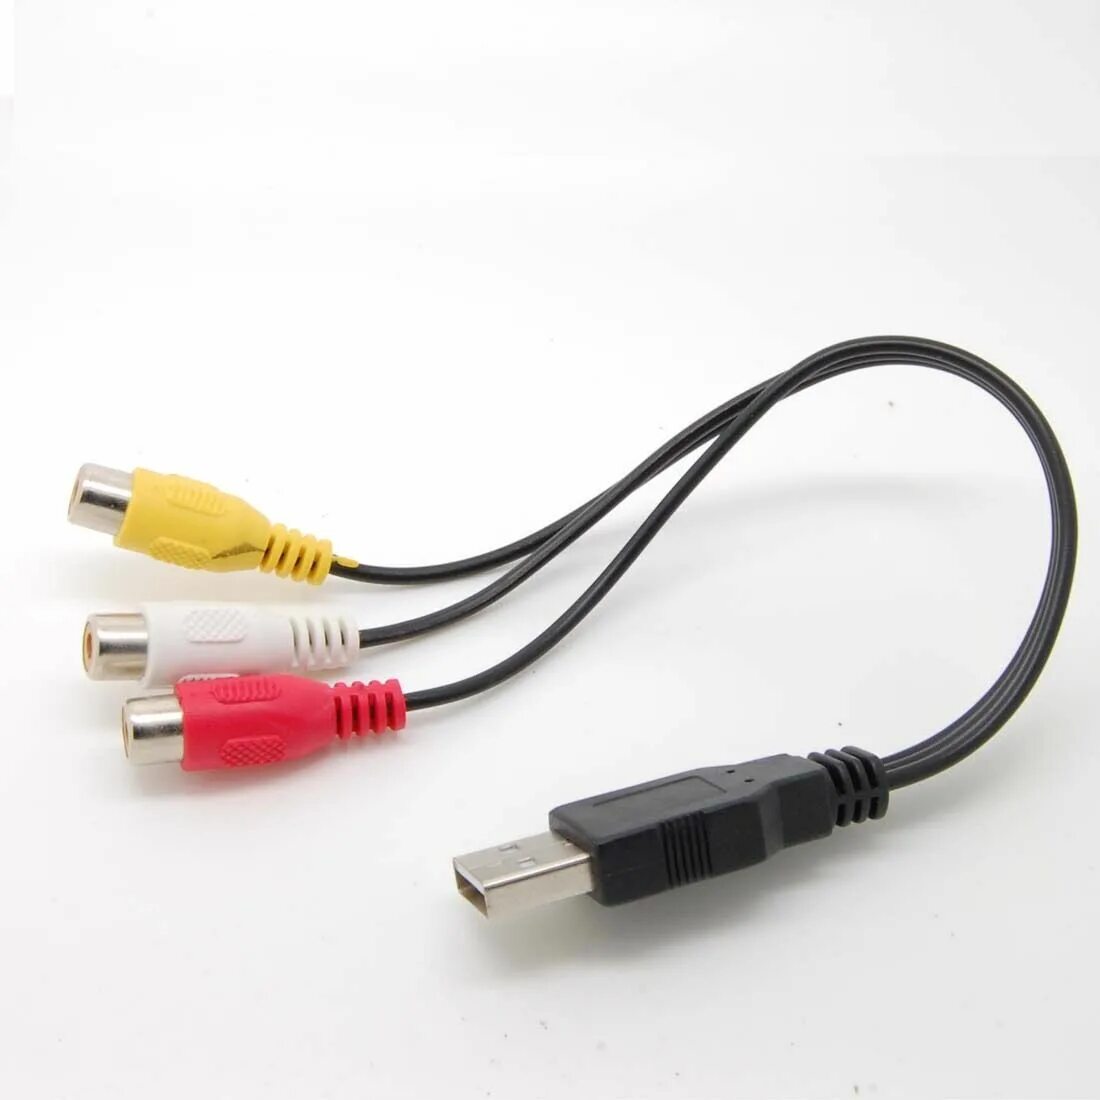 Usb разъем телевизора. Адаптер 3rca - USB переходник. Кабель USB 3rca кабель USB. Кабель USB-3rca (тюльпан). USB штекер а-3 RCA av a/v ТВ адаптер.